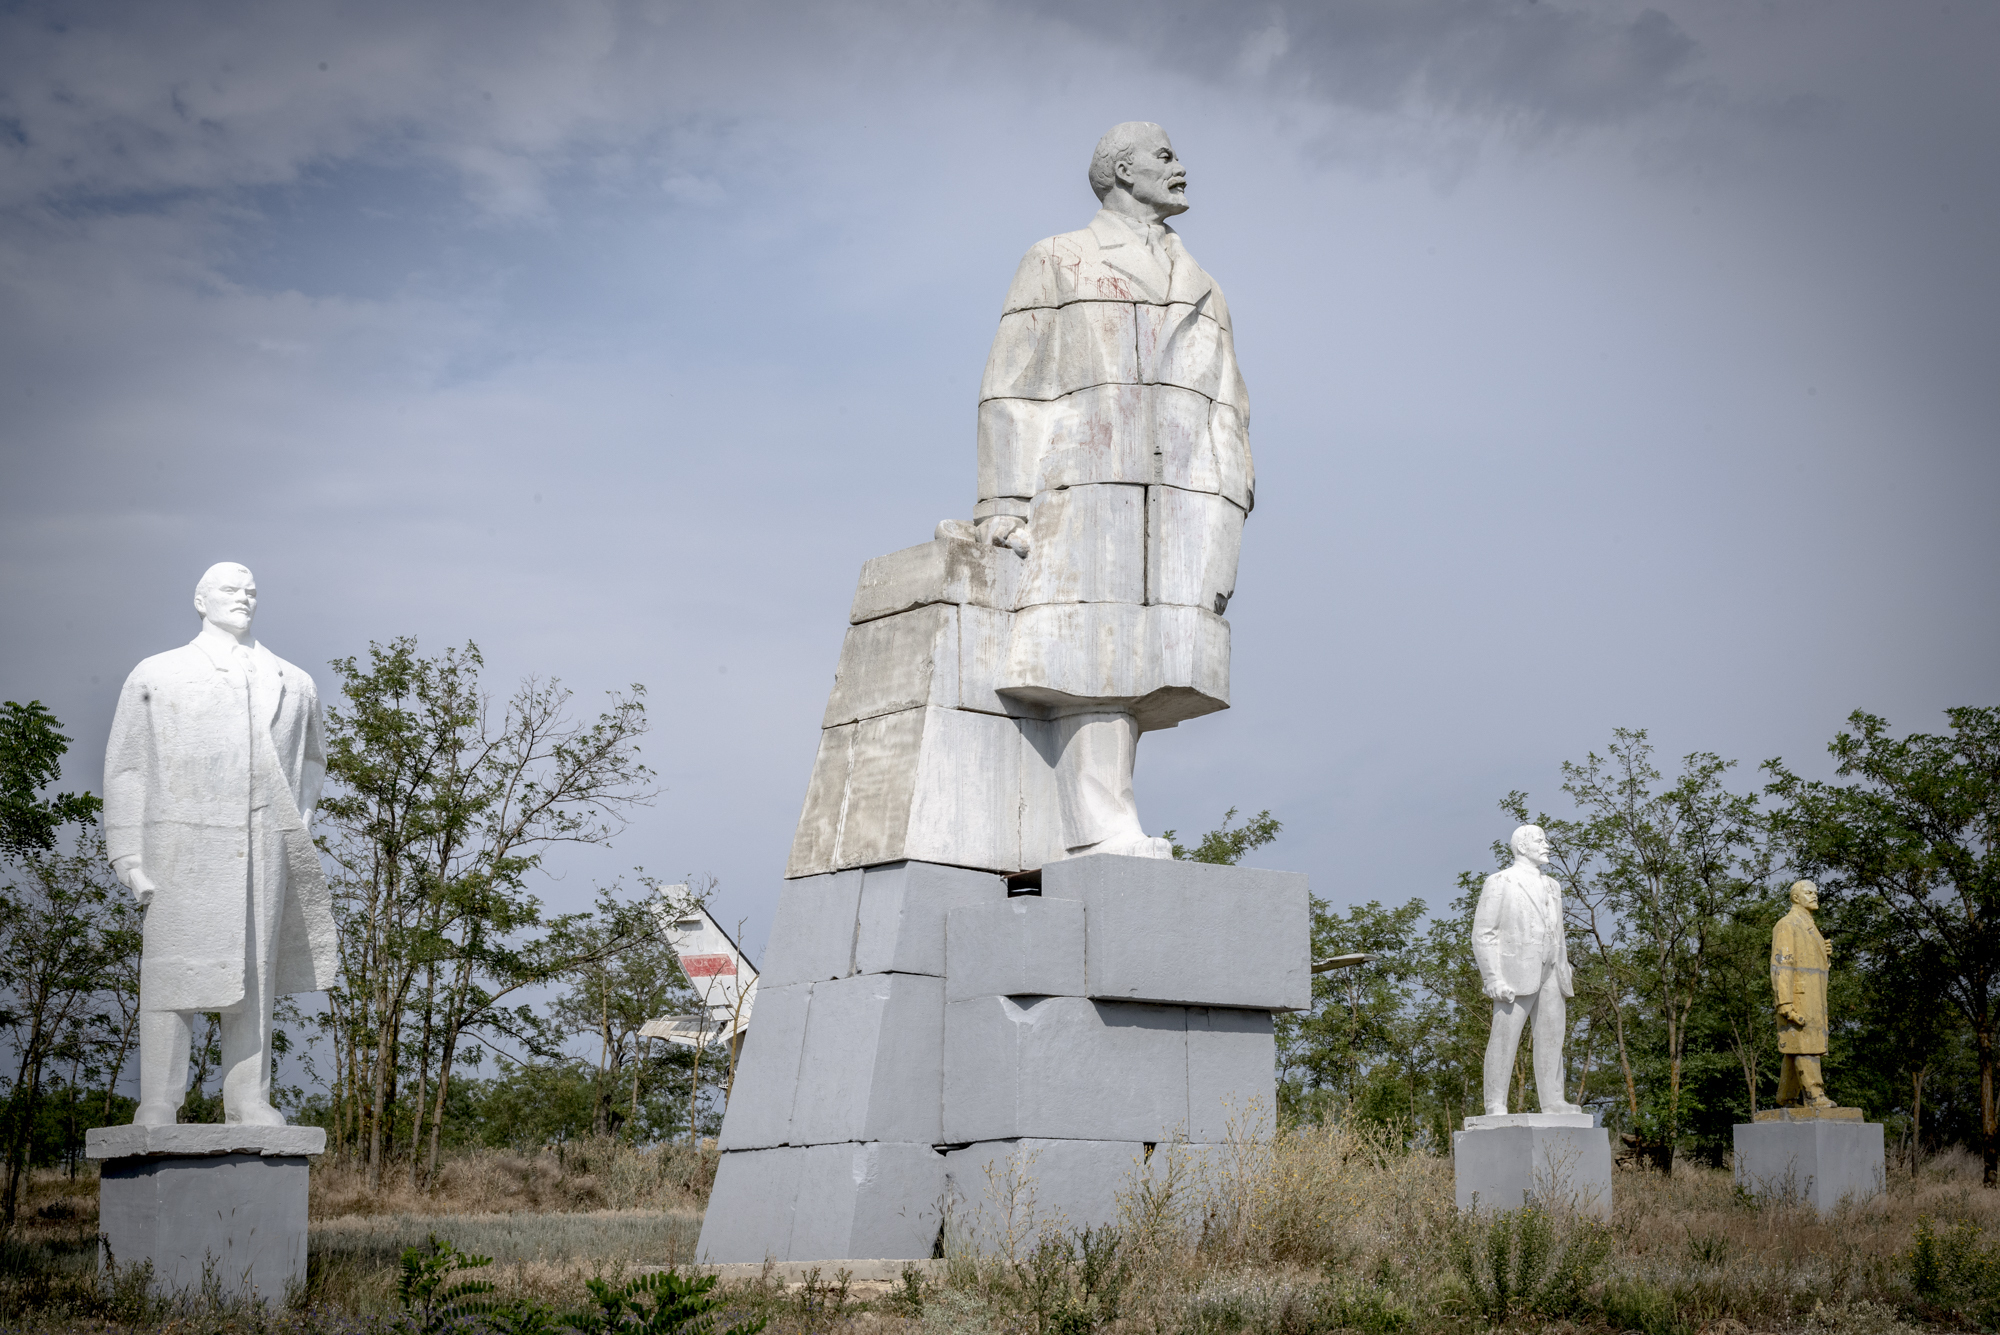 Ucrania desmantela el legado de la URSS: el metro de estatua de Lenin se paga a 18 euros